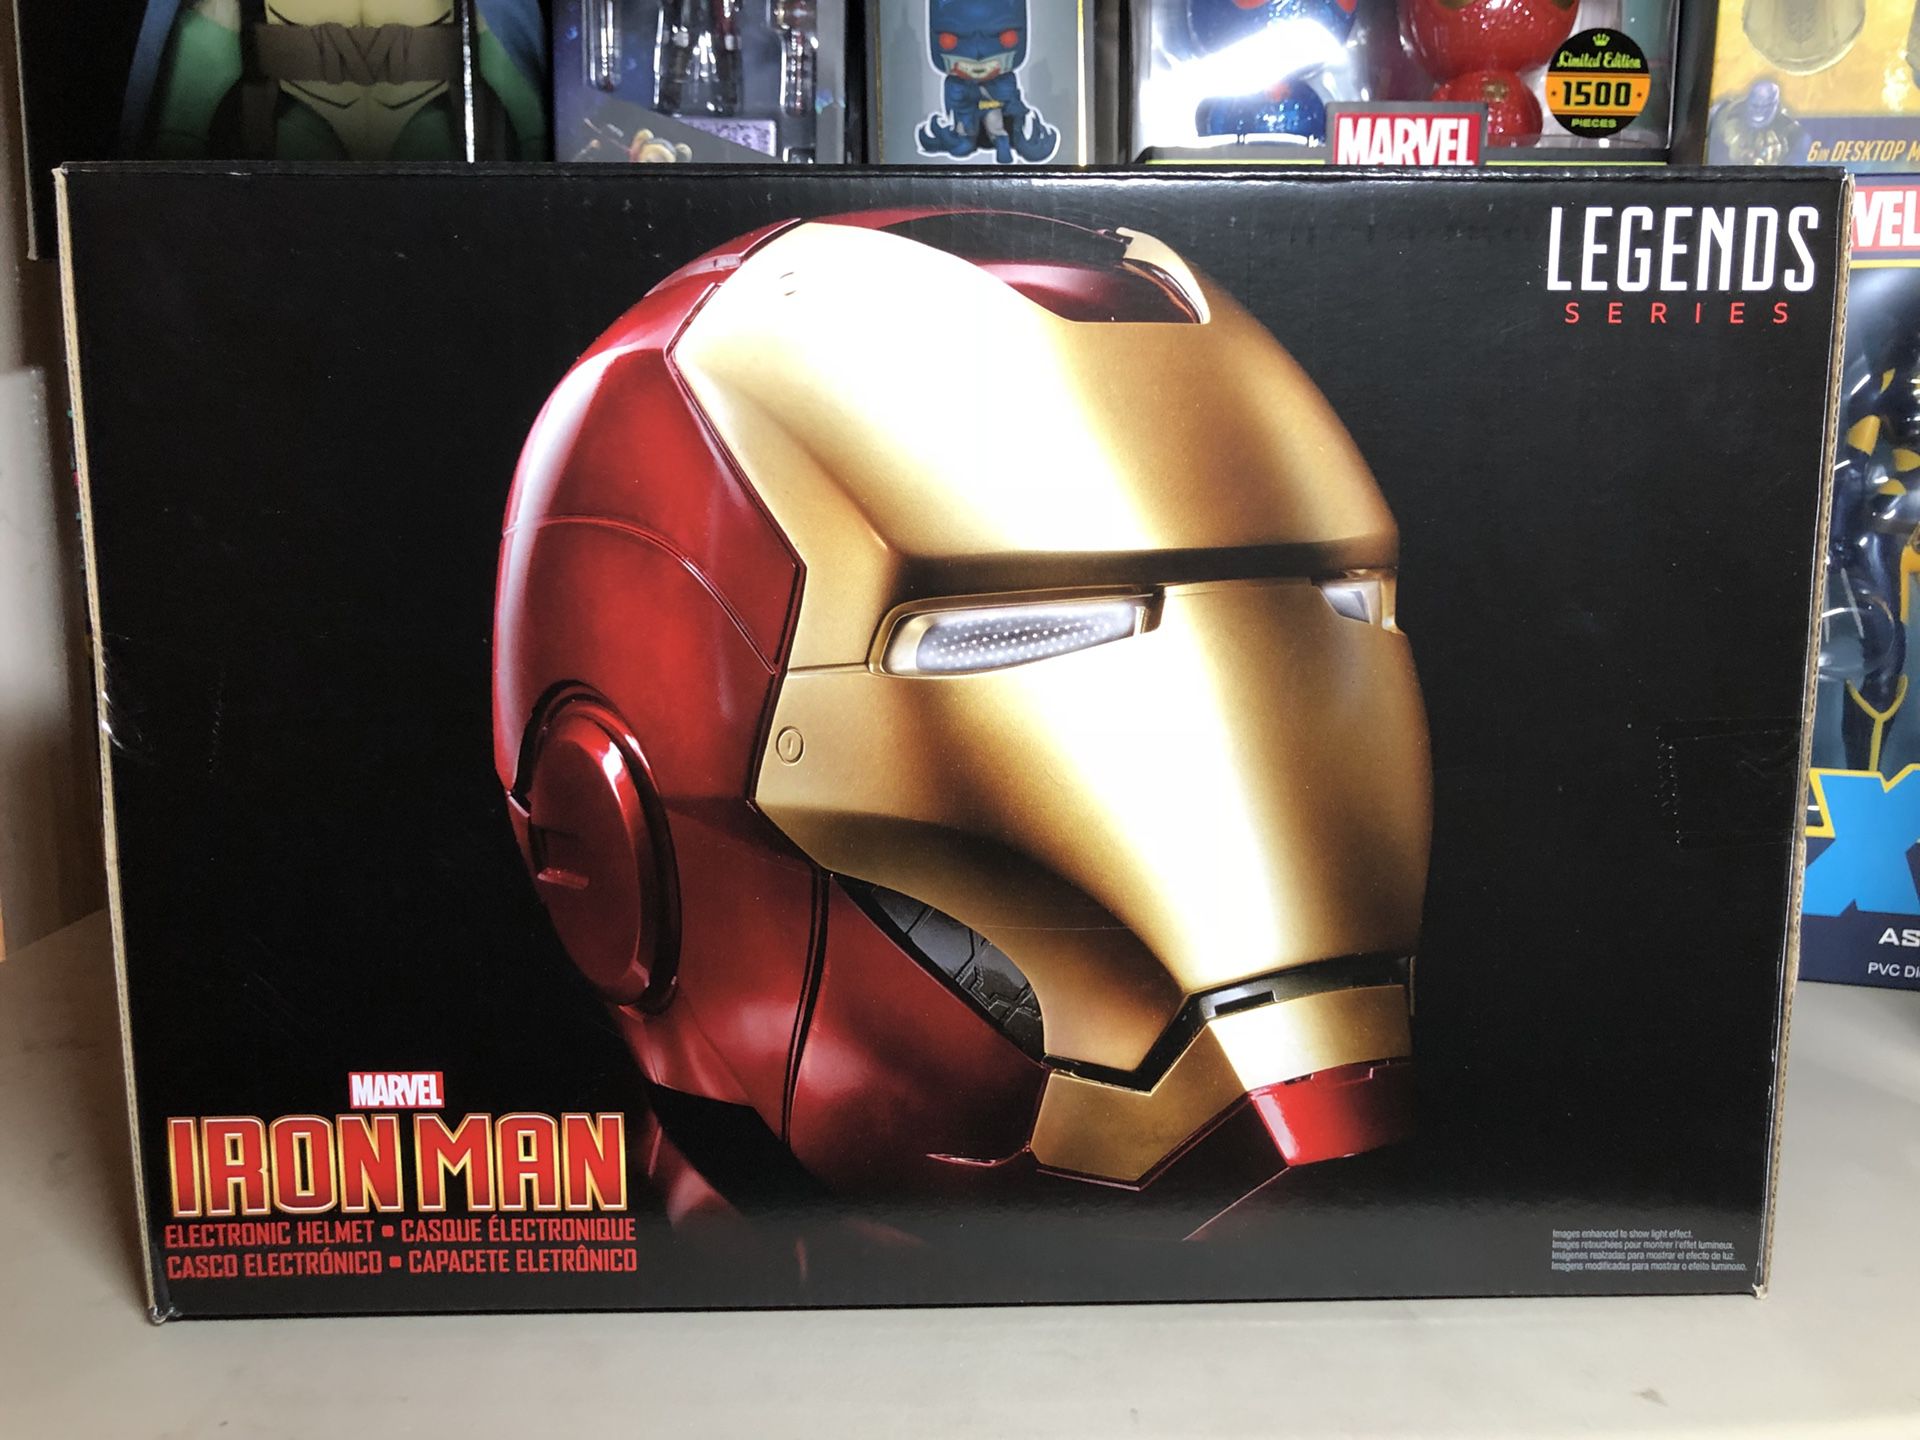 Marvel Iron Man Helmet Collectible Avengers Replica Funko Hasbro Toys cosplay